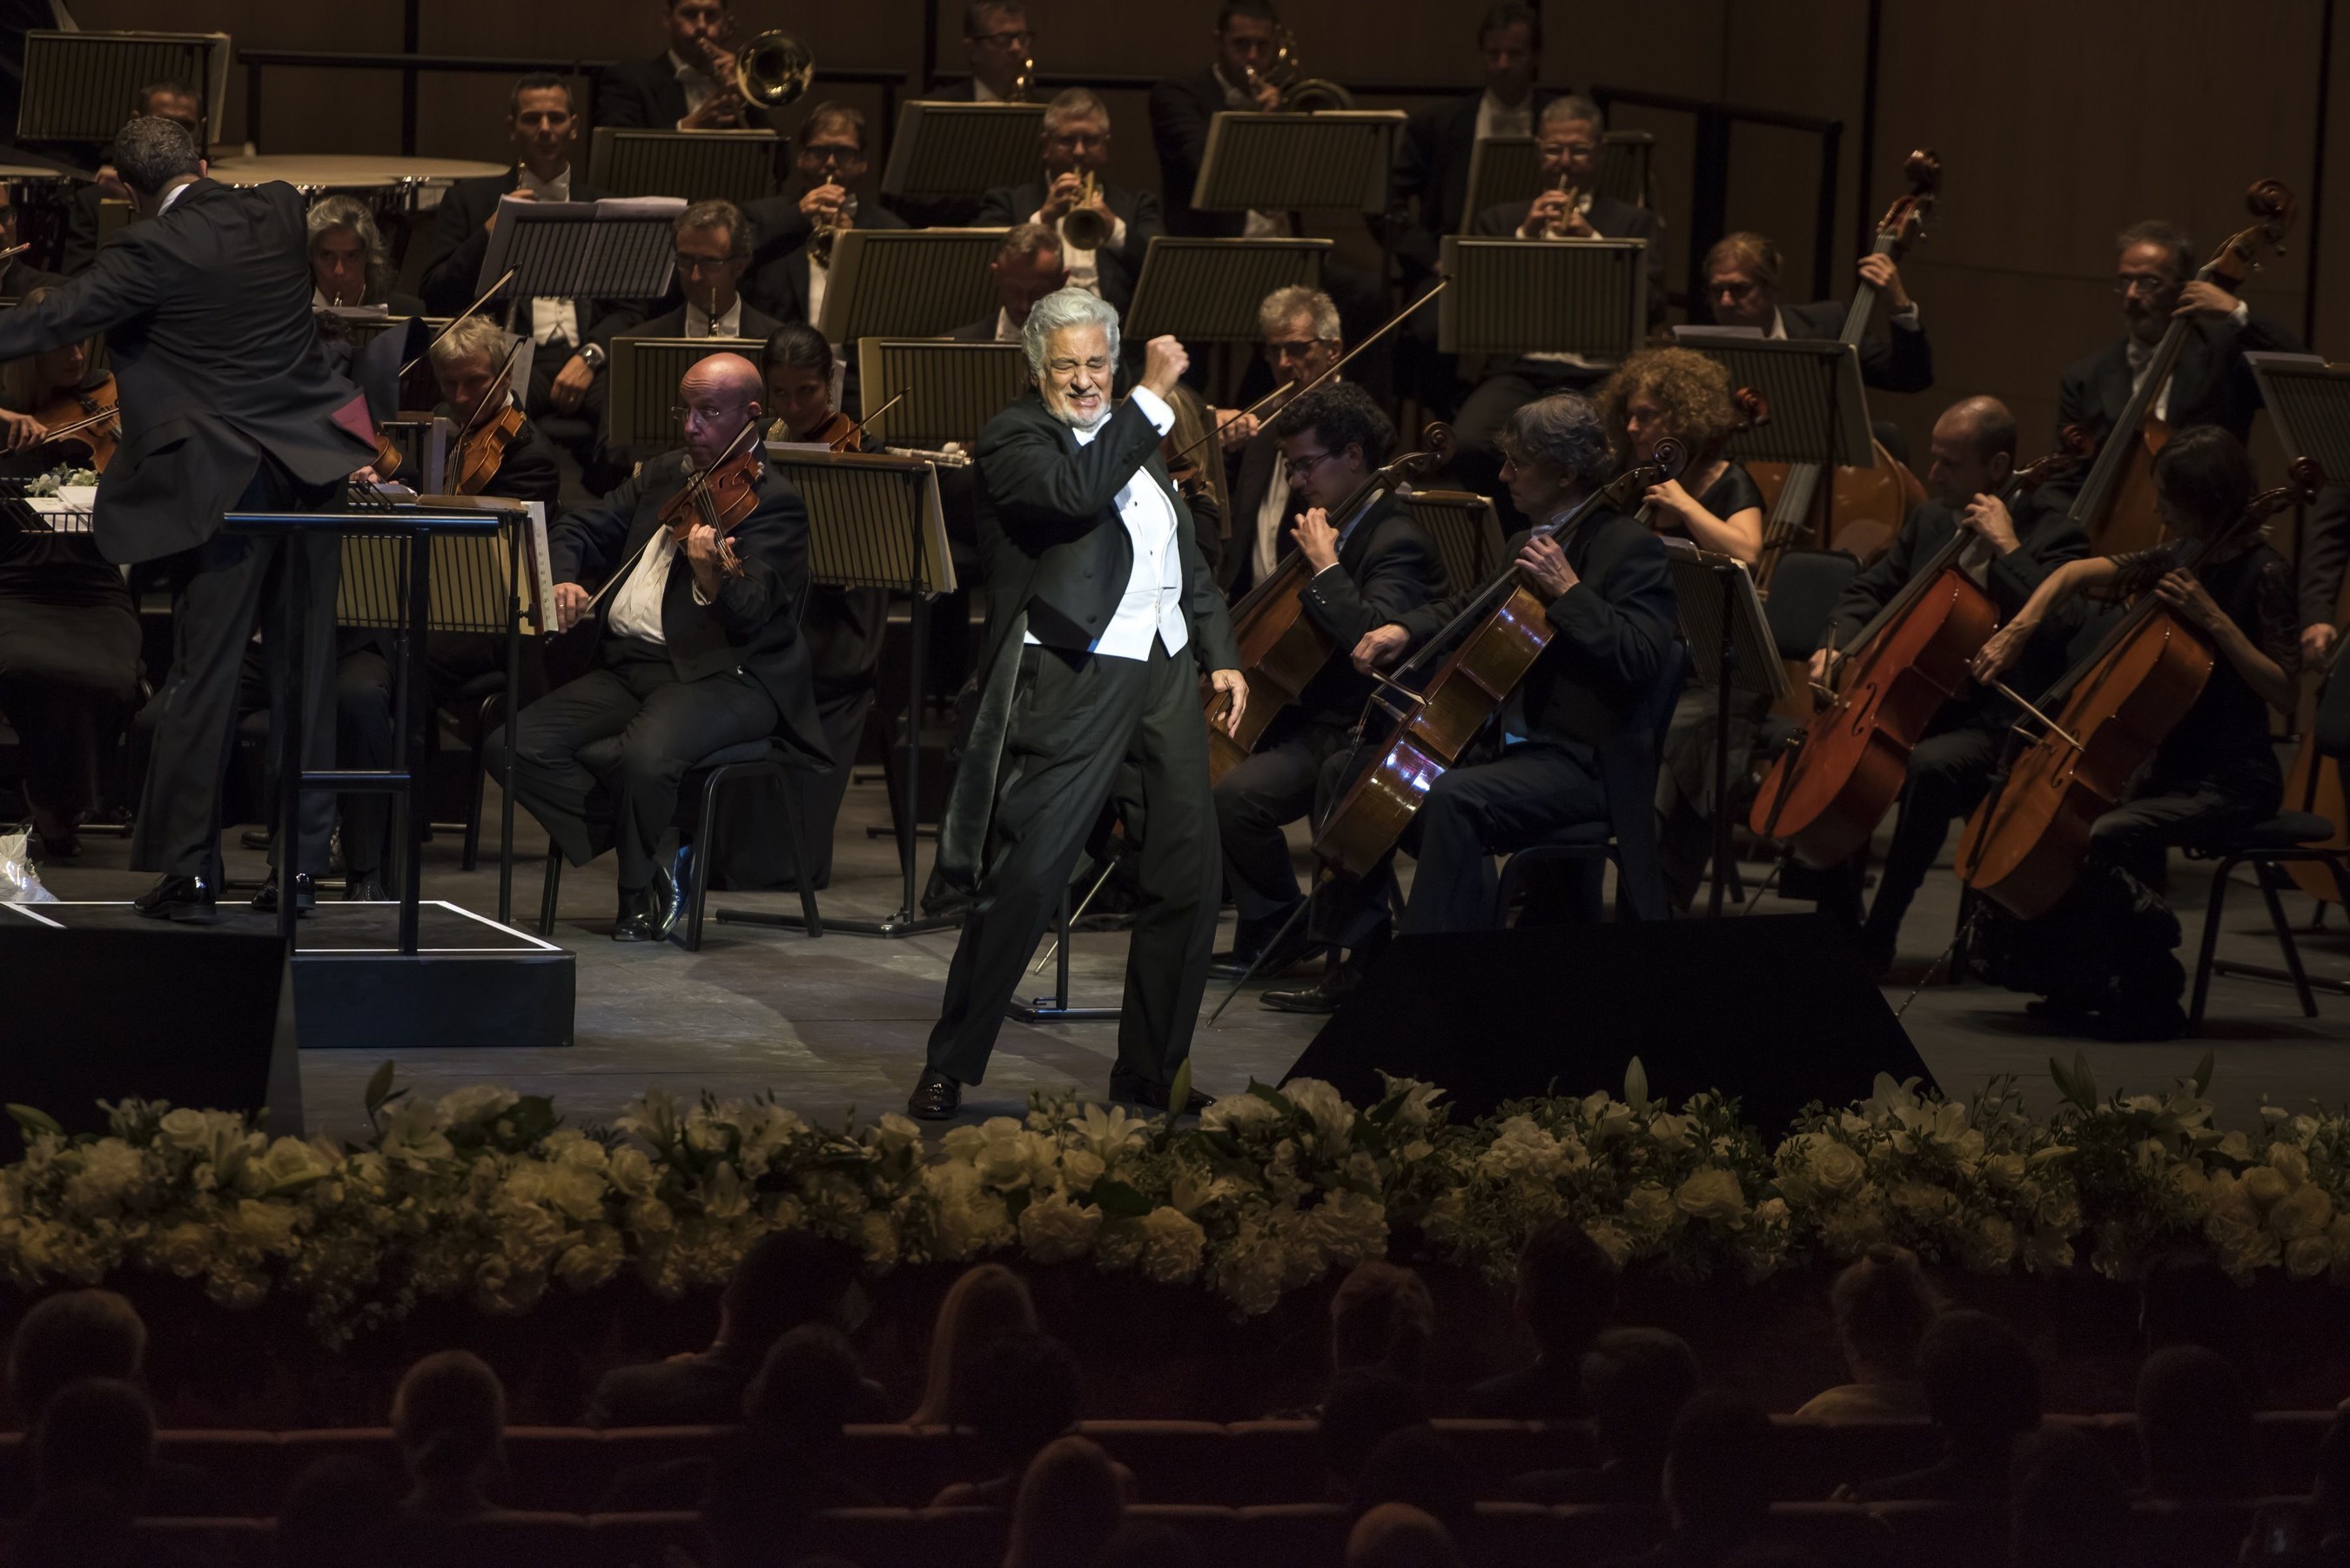 Placido Domingo takes to the stage at the first night of the Dubai Opera. (PRNewsFoto/Dubai Opera)